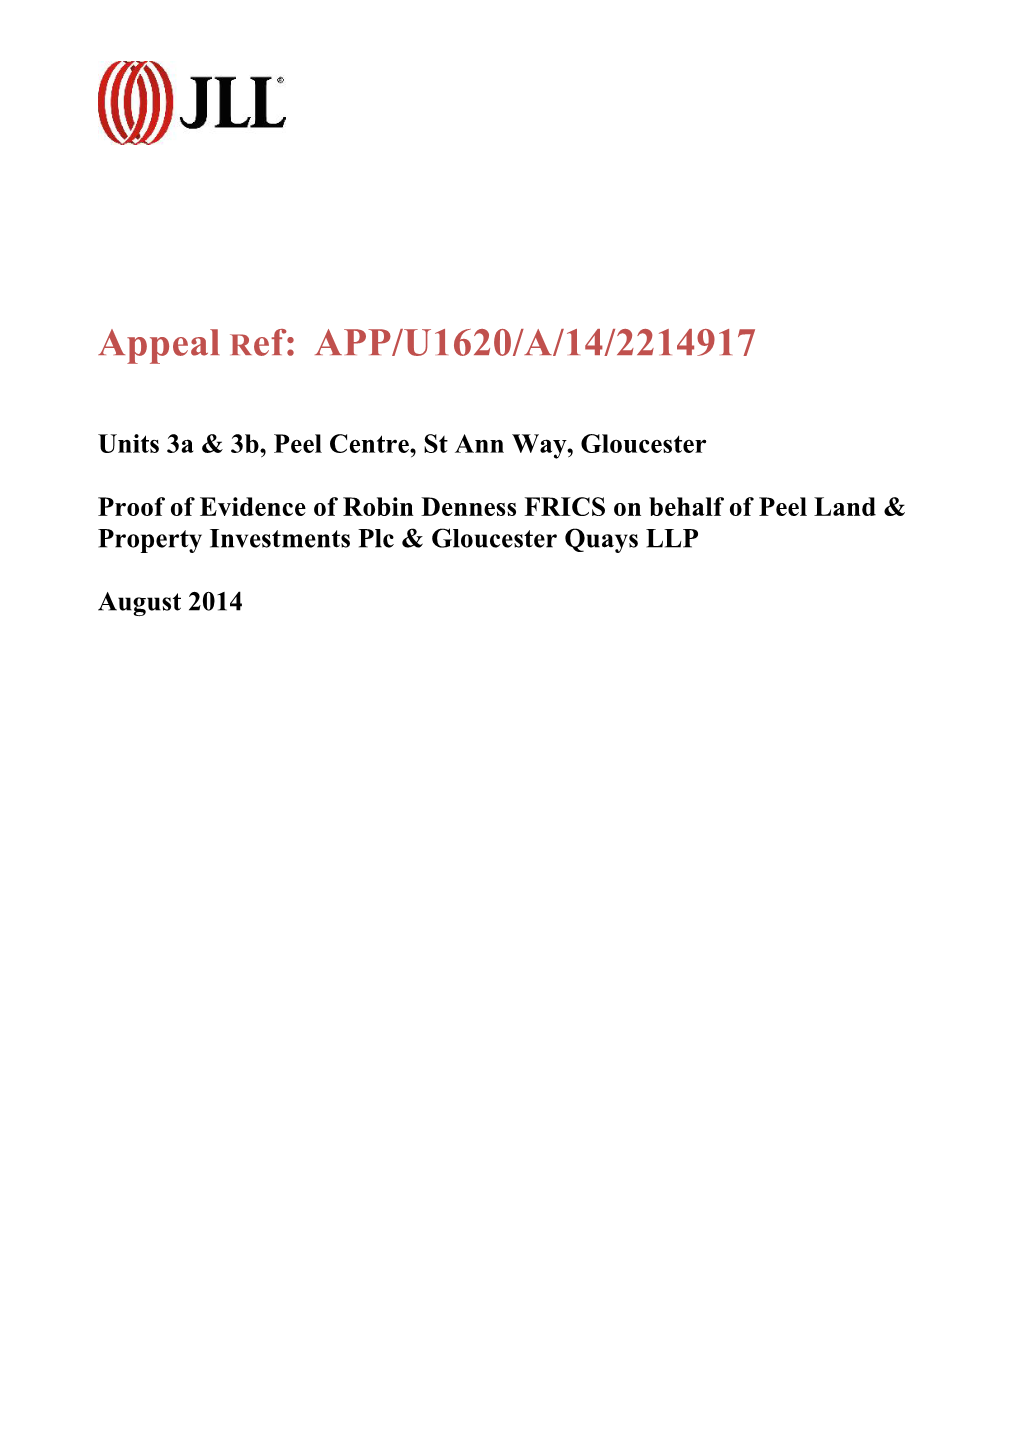 Appeal Ref: APP/U1620/A/14/2214917